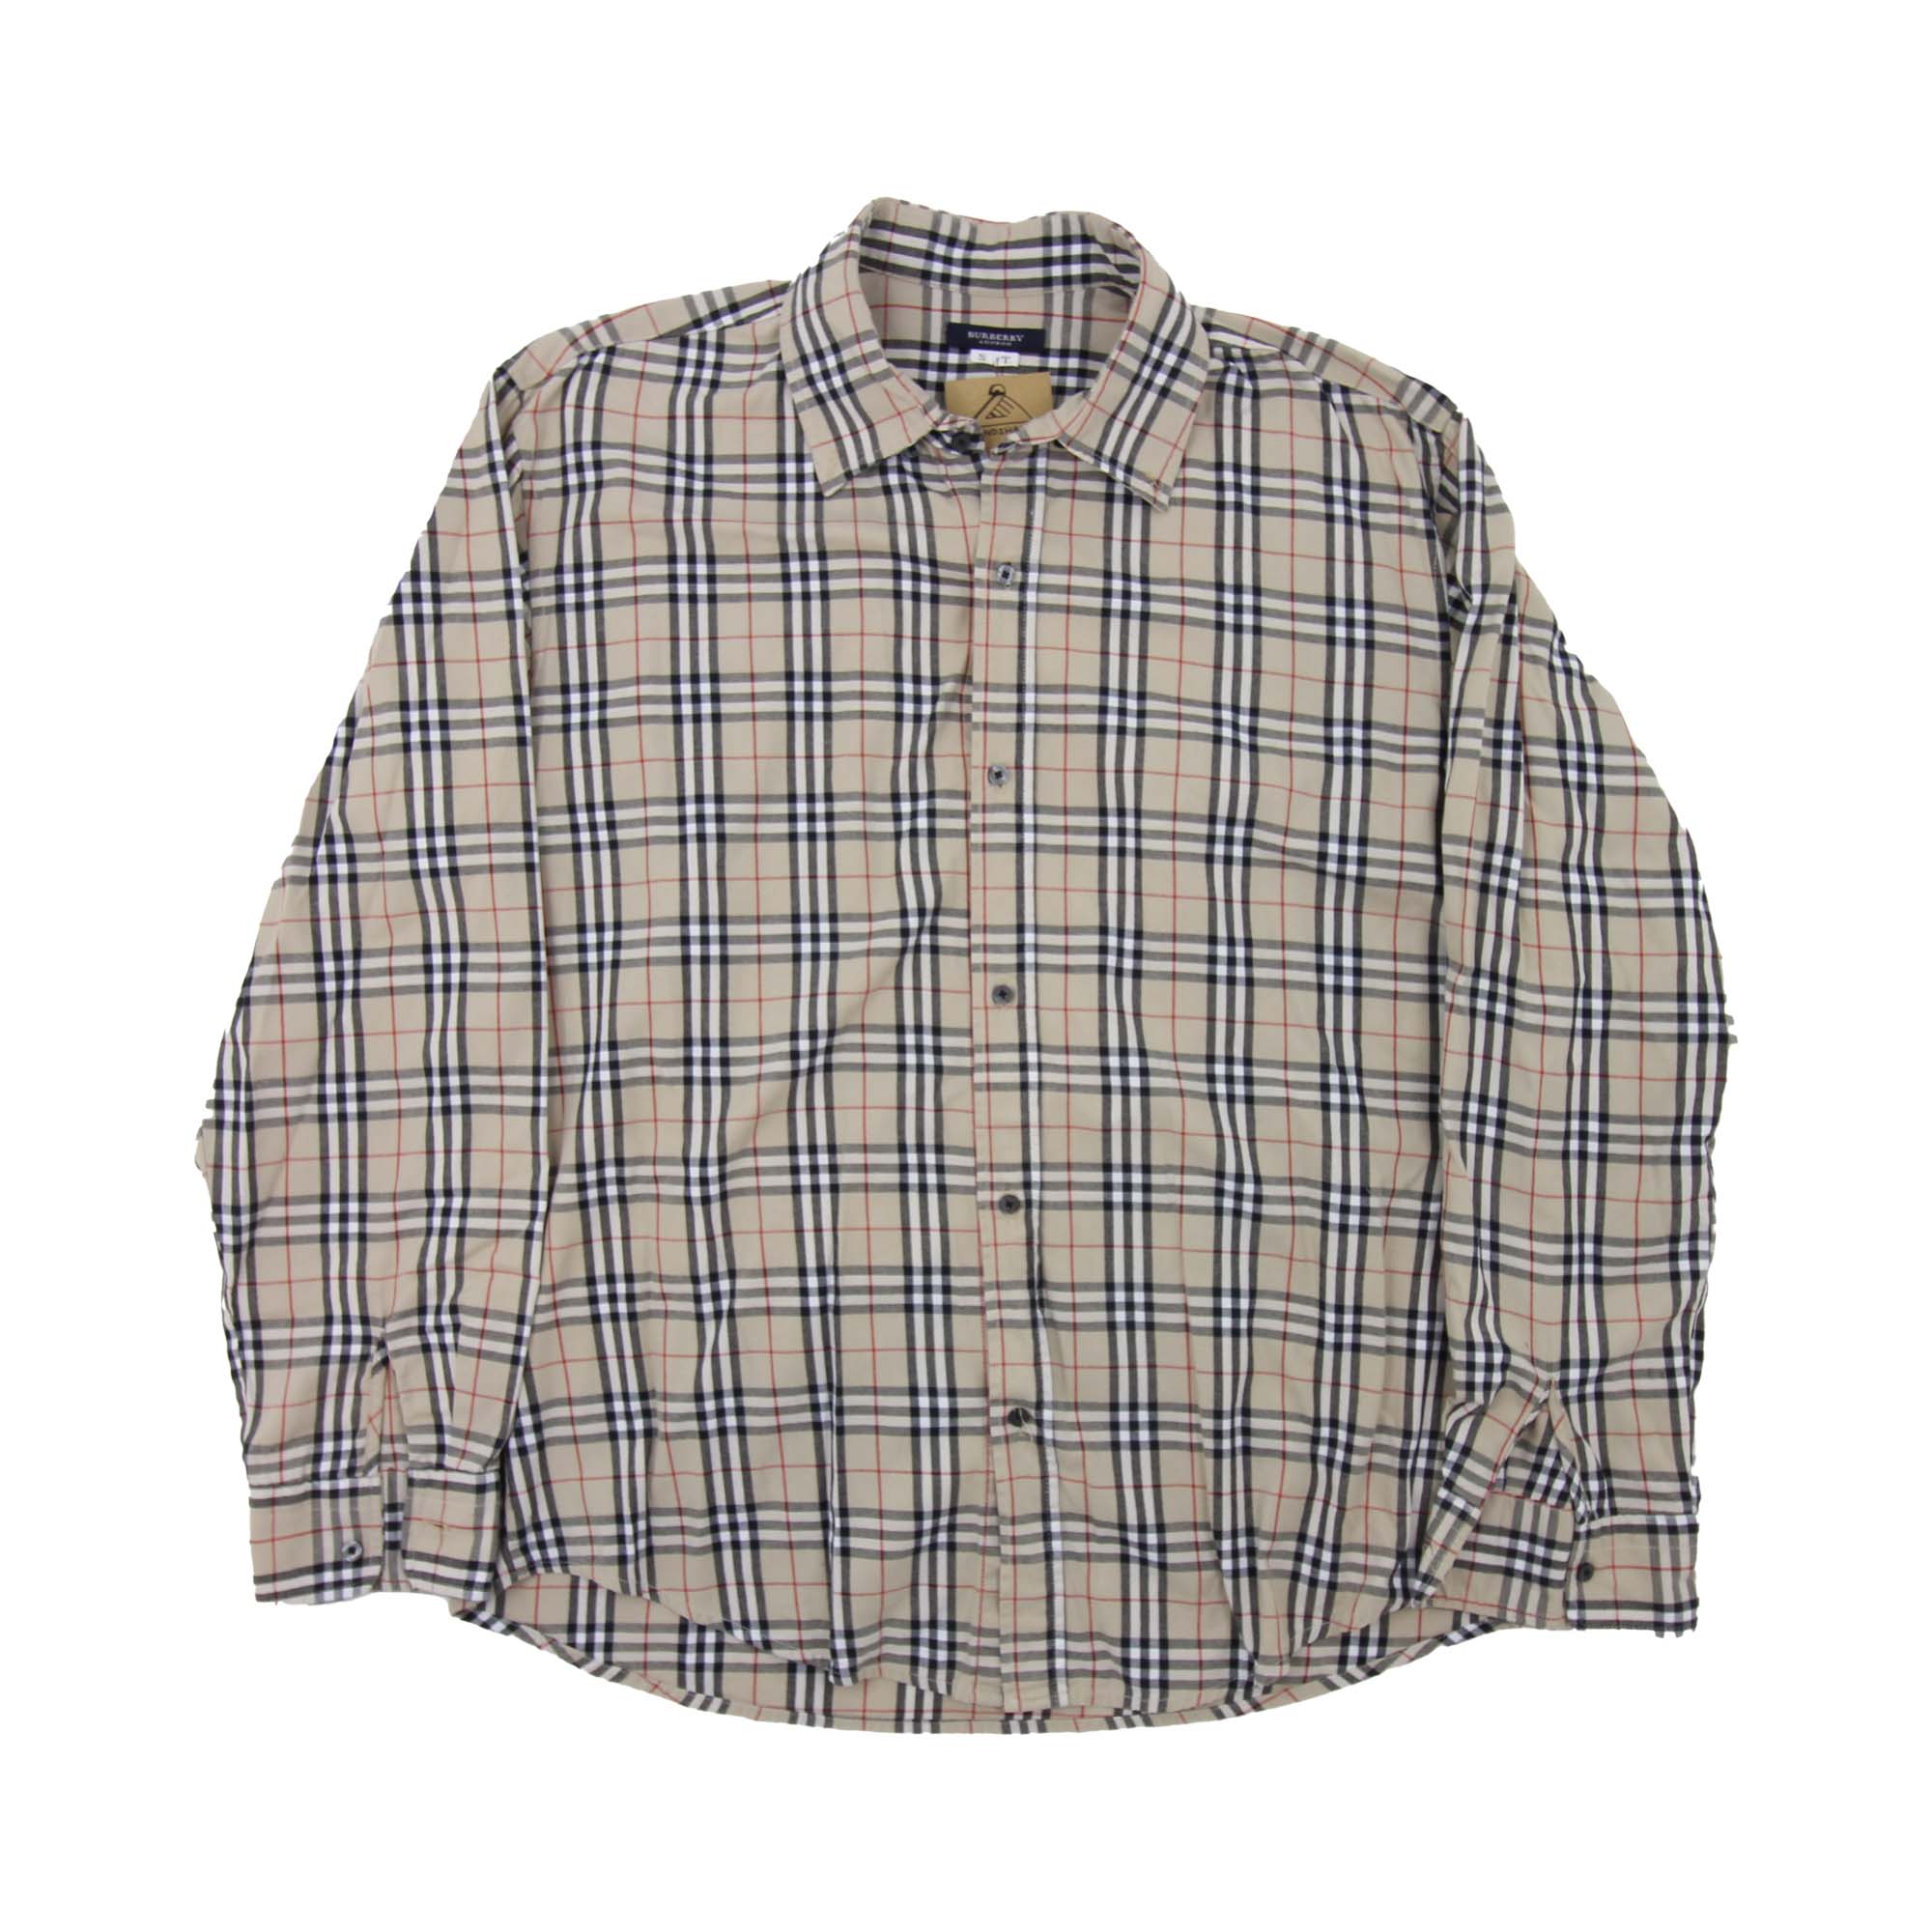 Burberry Long Sleeve Shirt - XL